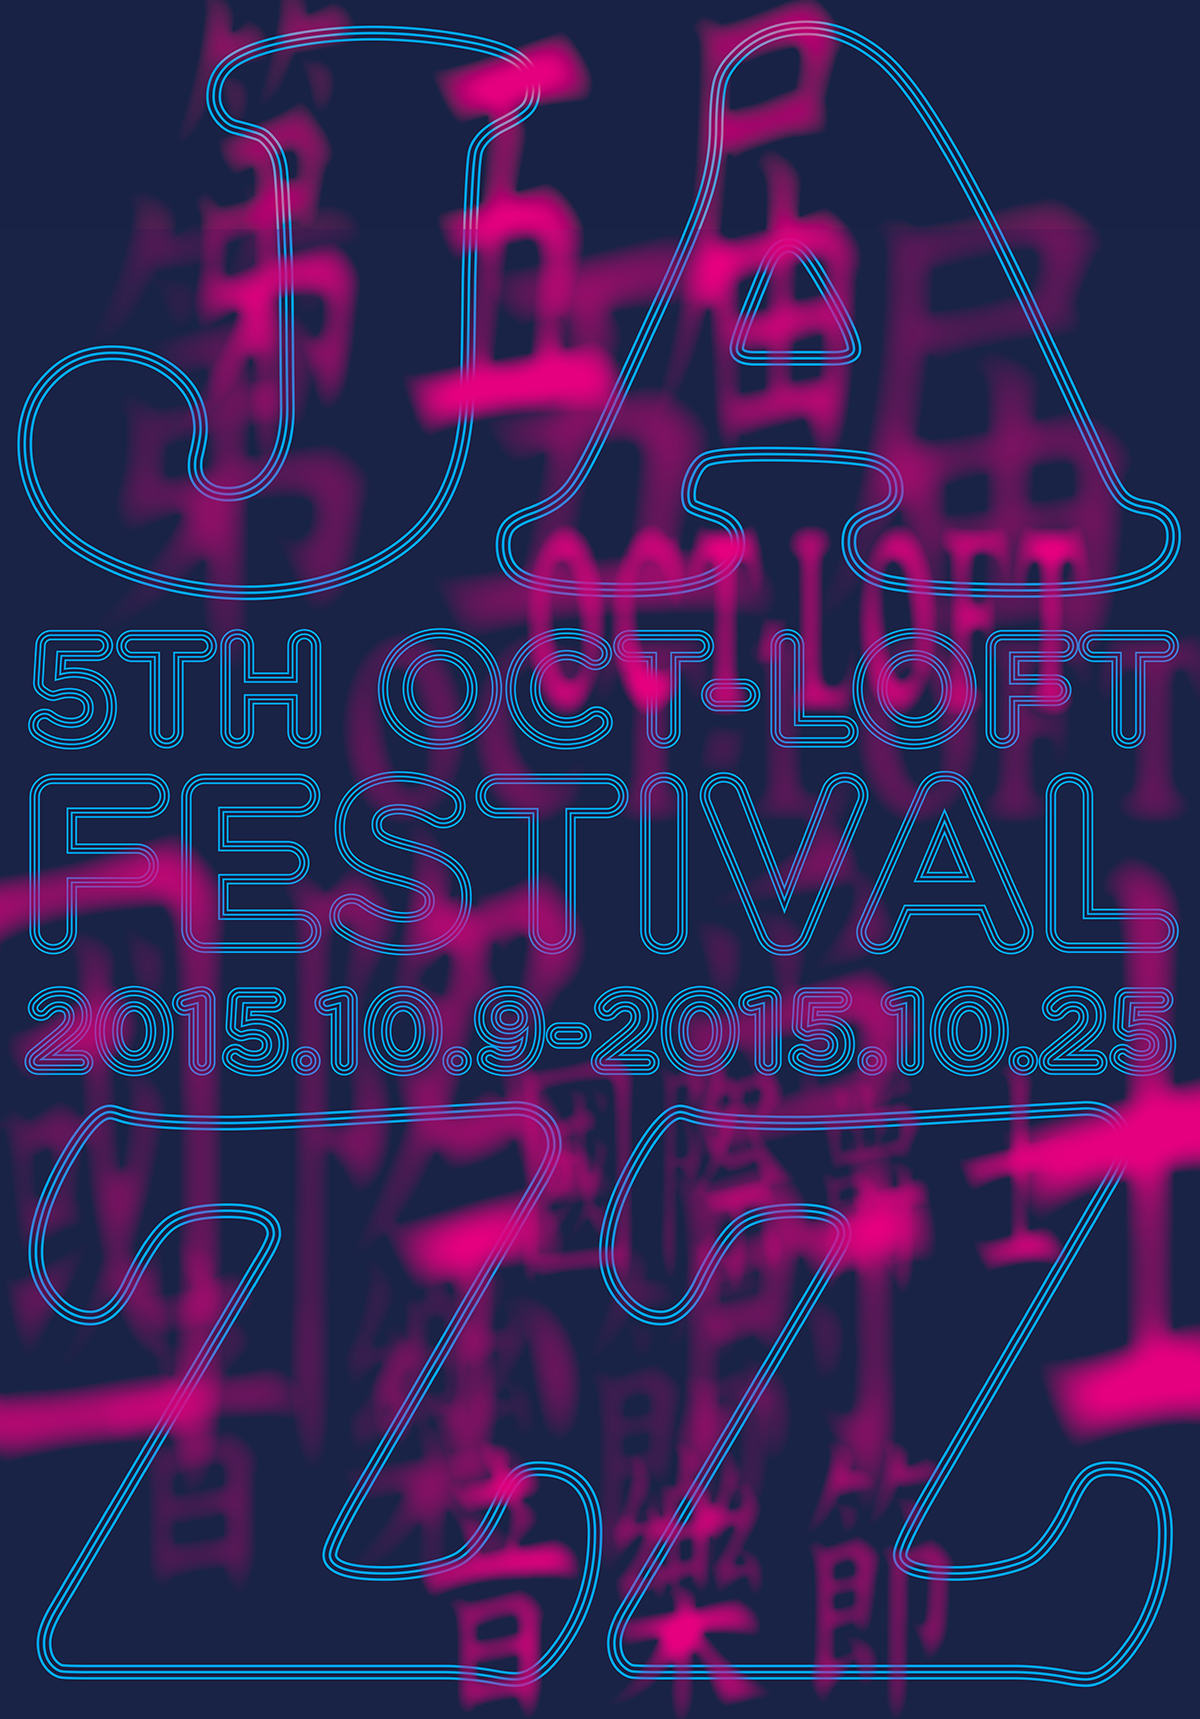 5th oct-loft jazz festival_方案二